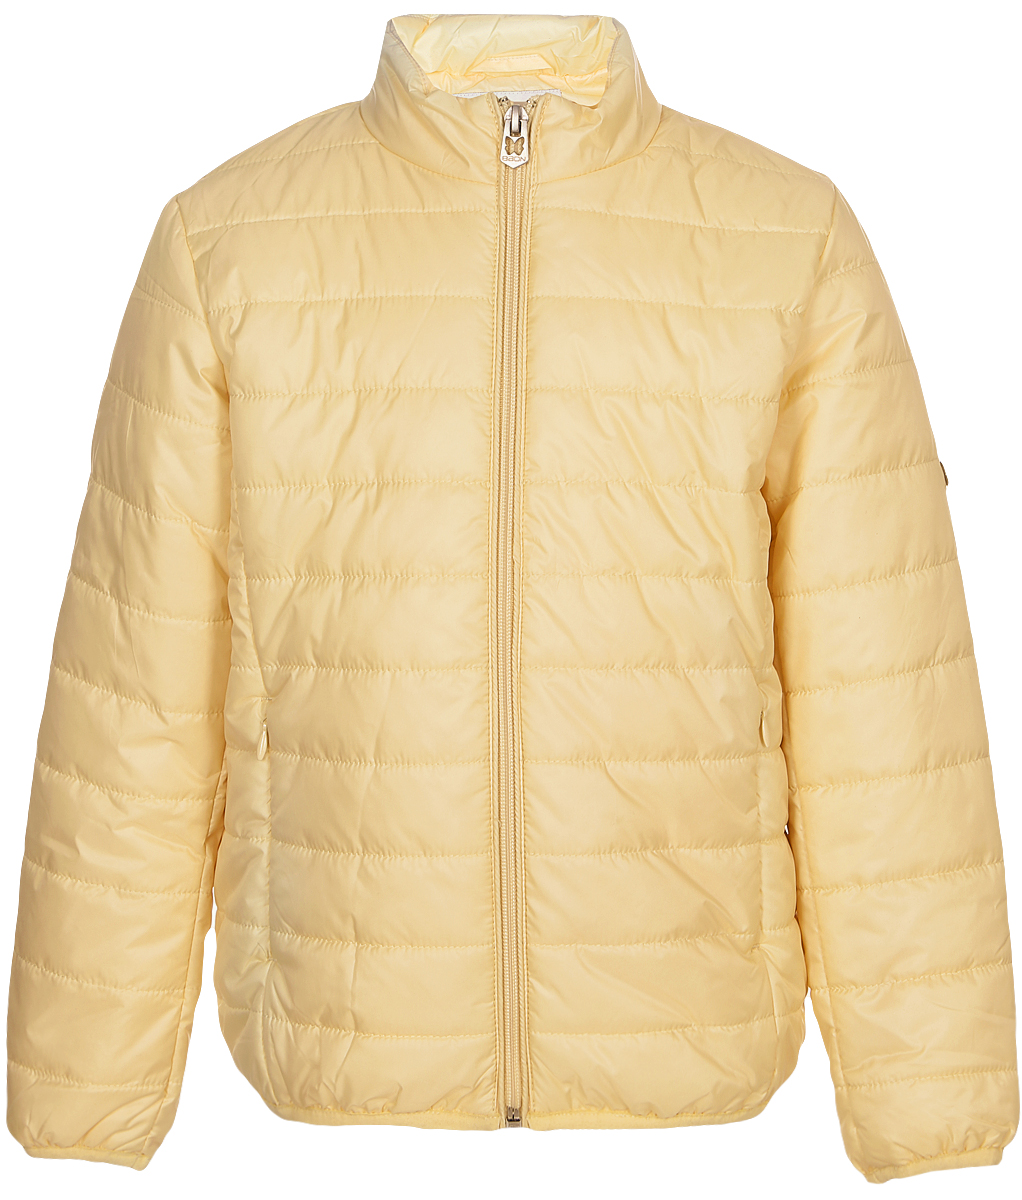 Куртка для девочки Baon, цвет: желтый. BK038002_Straw. Размер 98/104